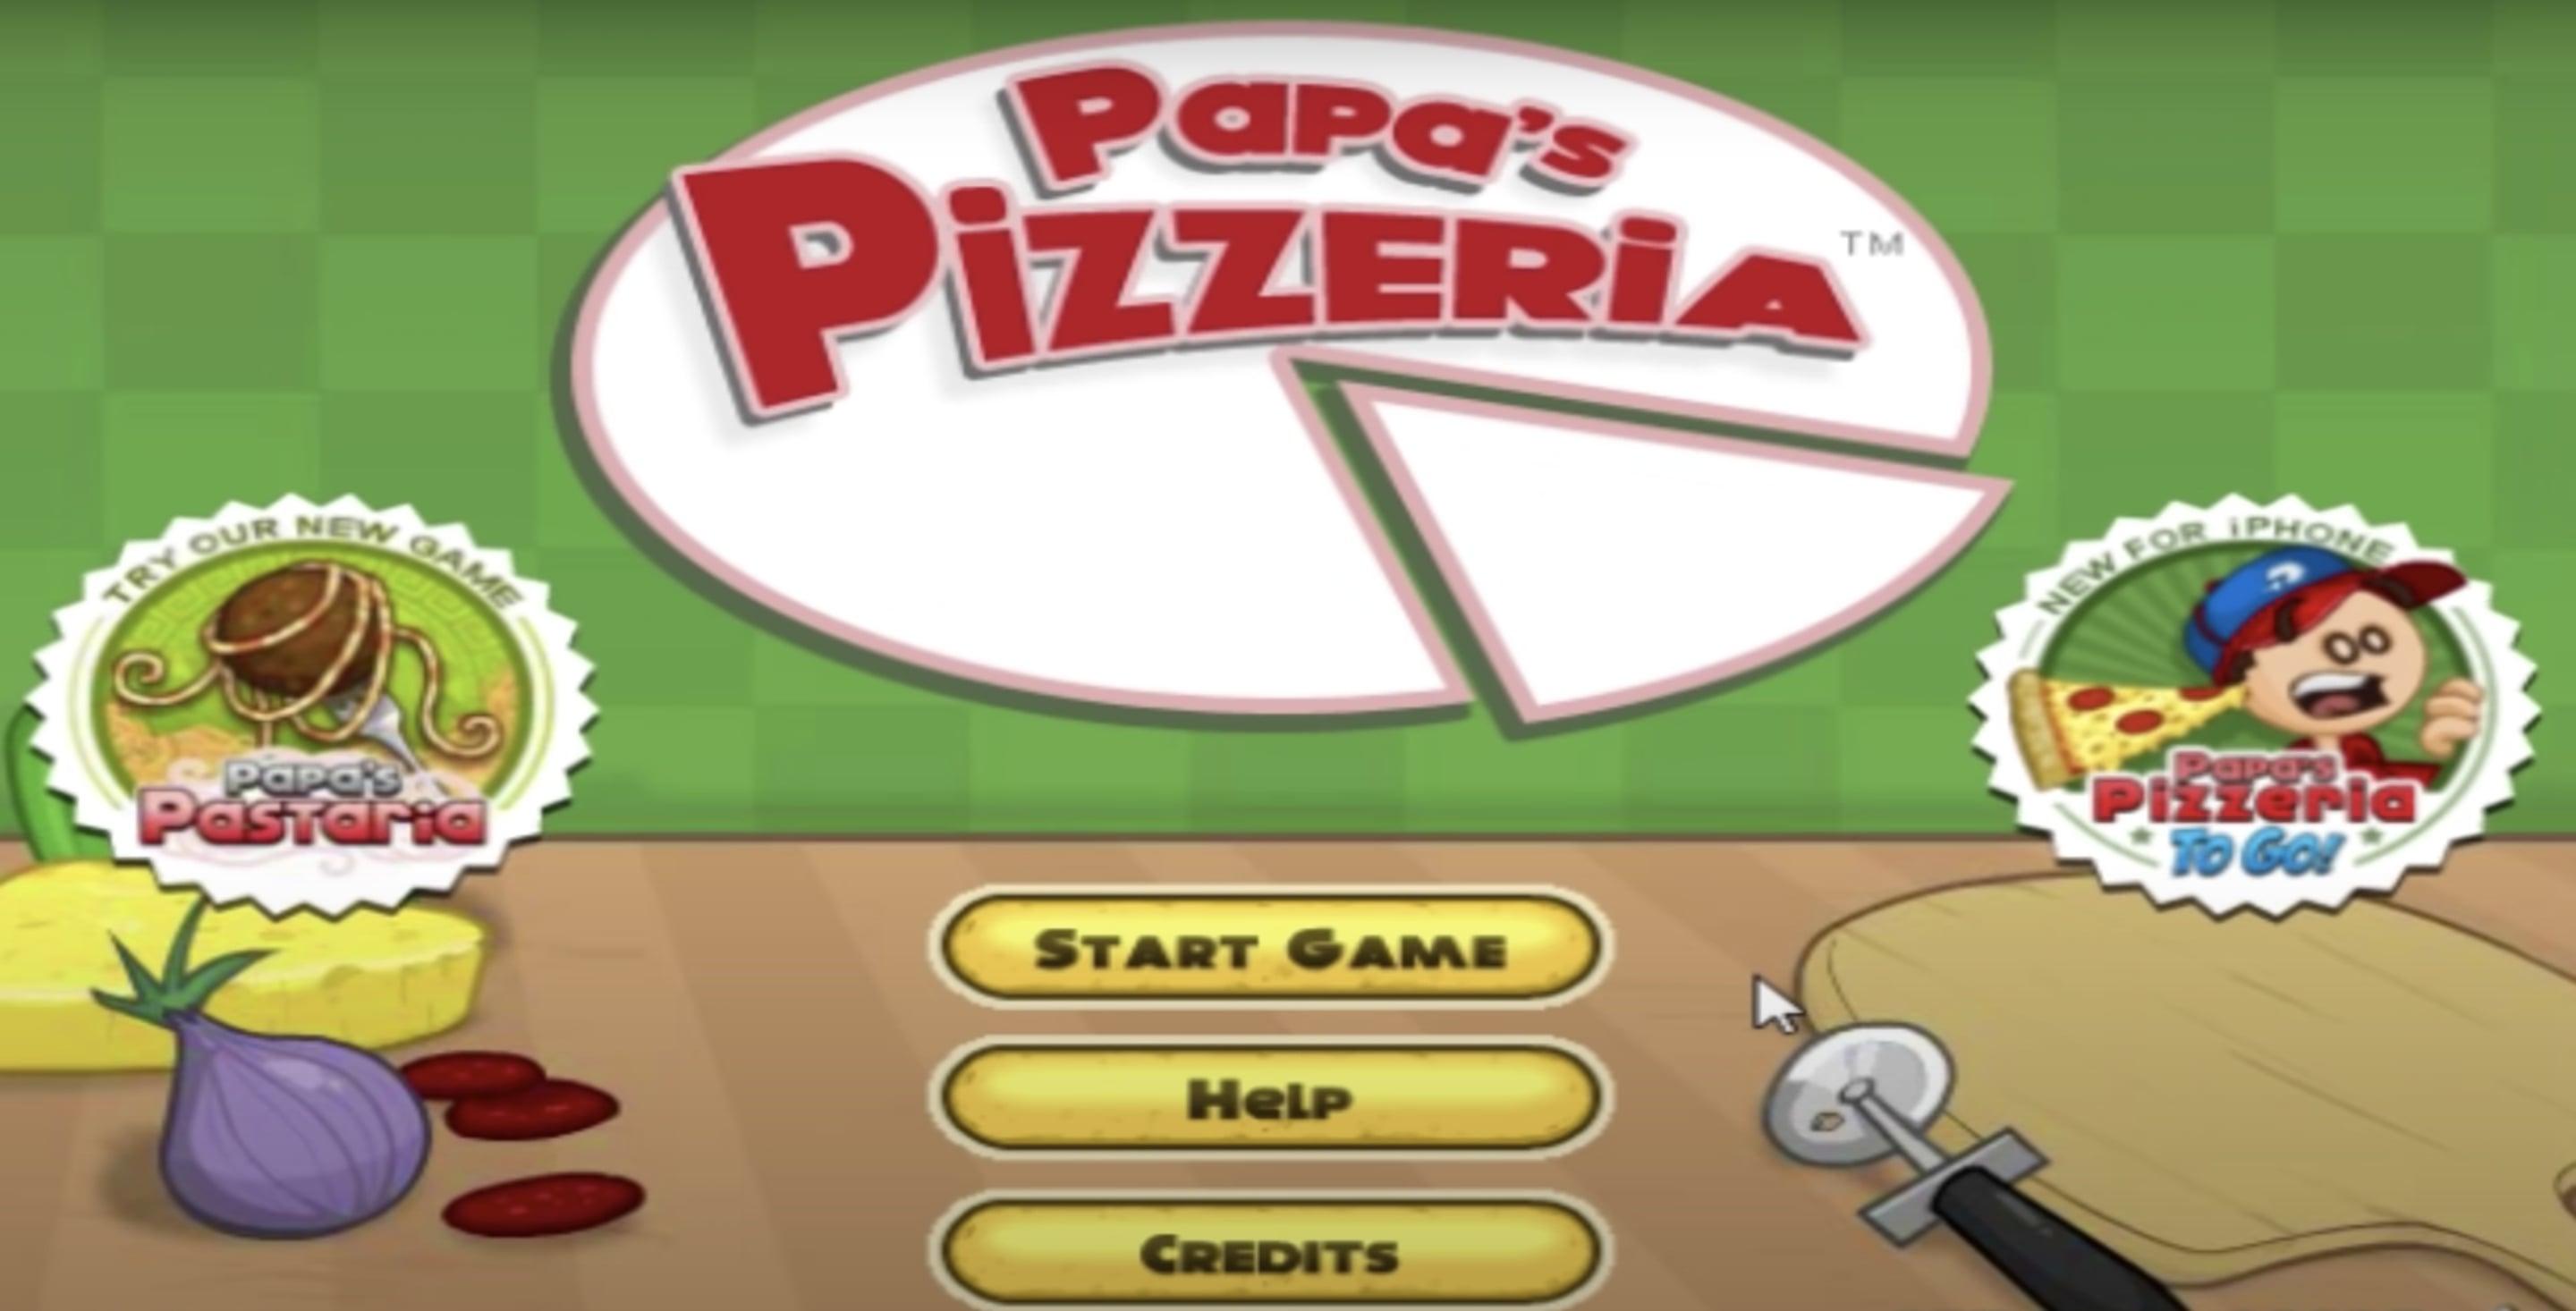 Papa's Pizzeria opening image